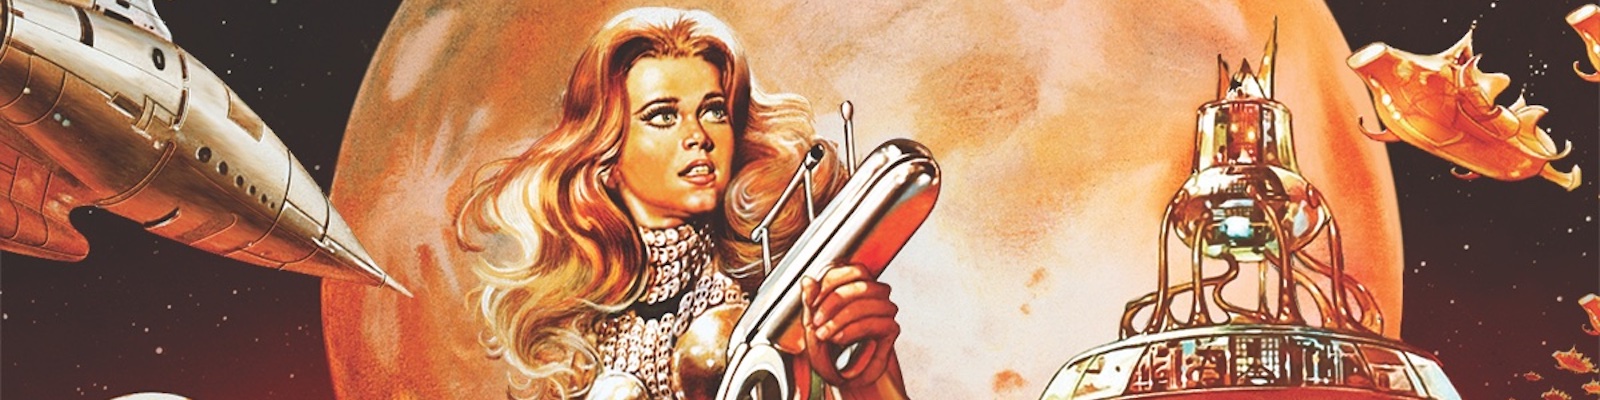 Original poster illustration of Jane Fonda in Barbarella